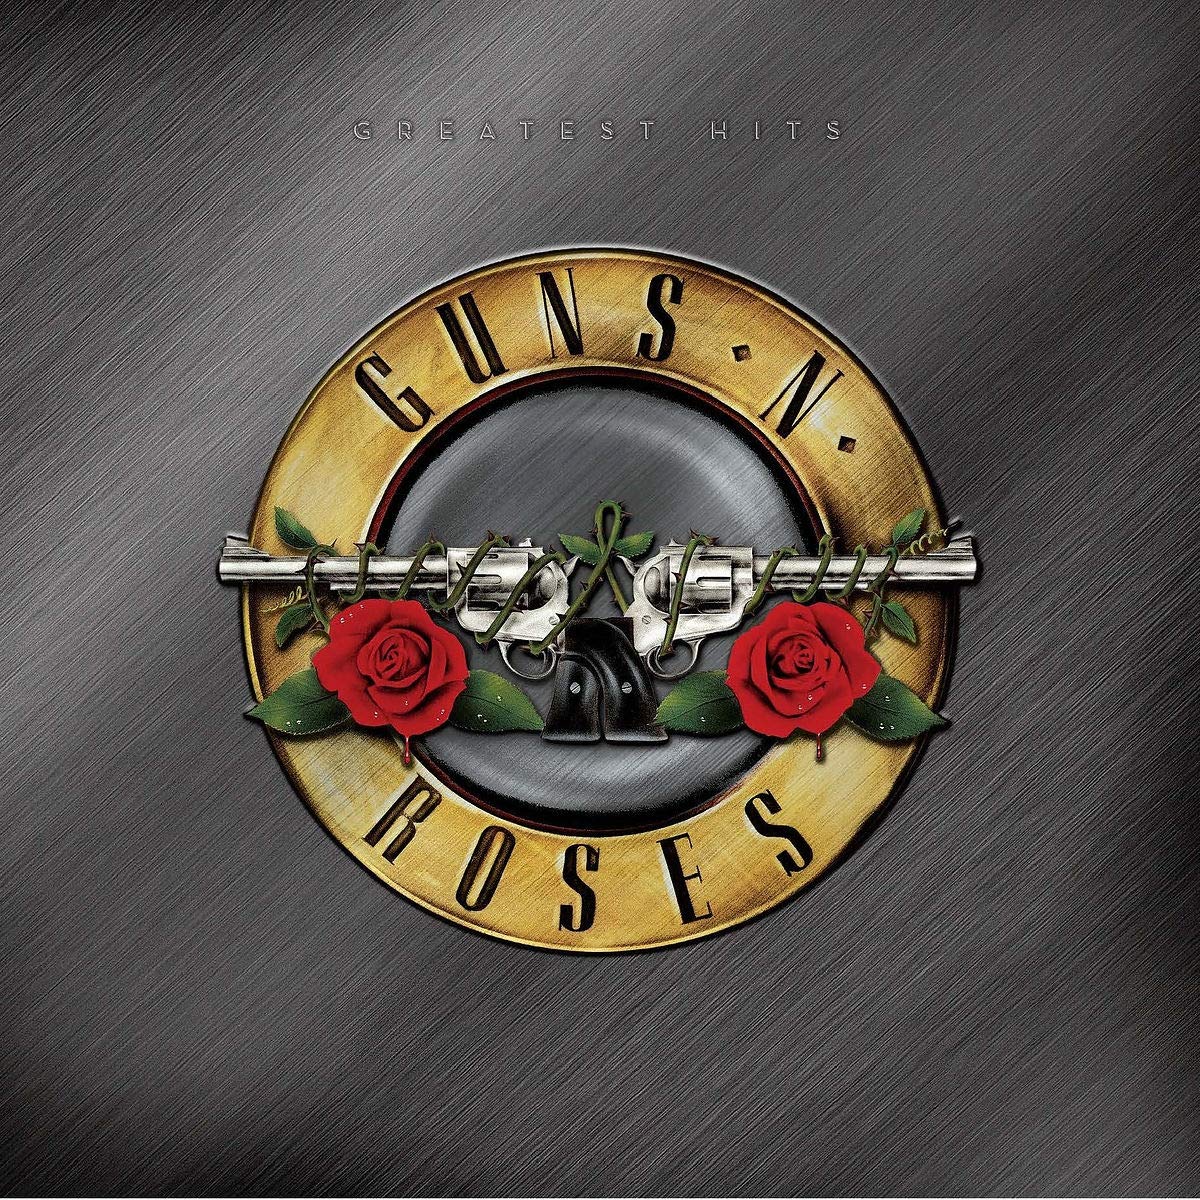 Guns N' Roses (건즈 앤 로지스) - Greatest Hits [2LP]